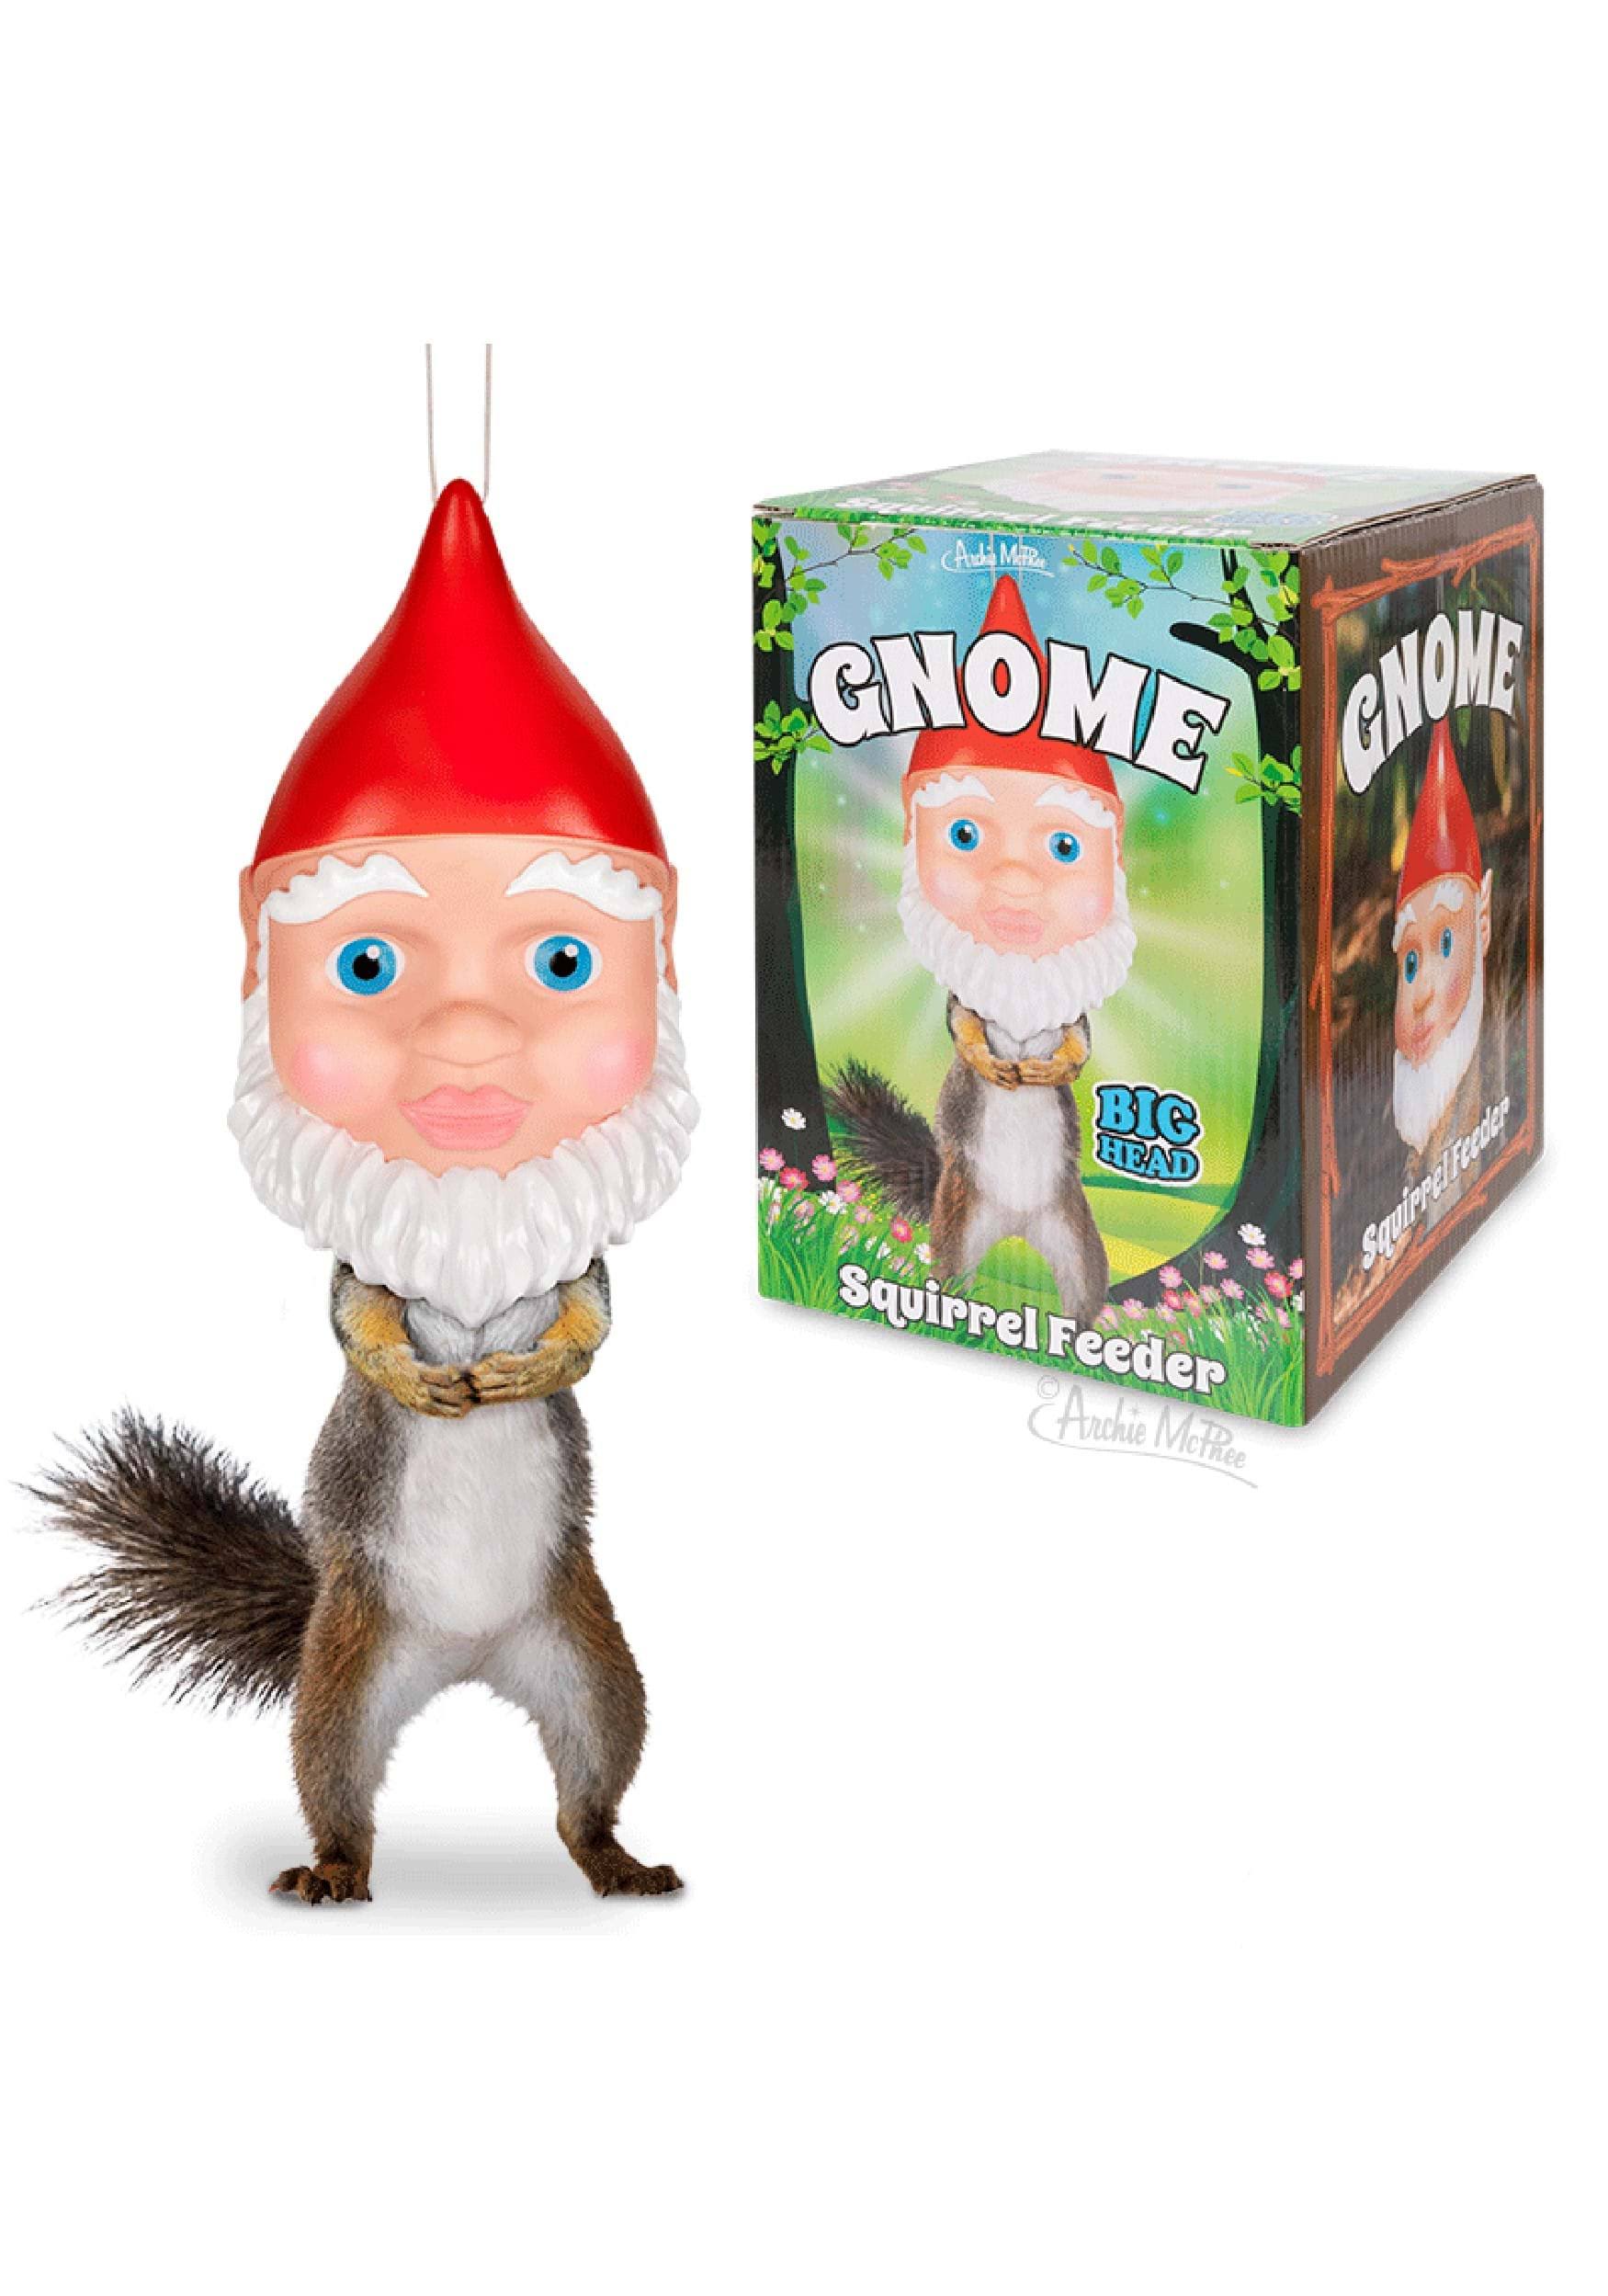 Archie McPhee Funny Gnome Squirrel Feeder 29847